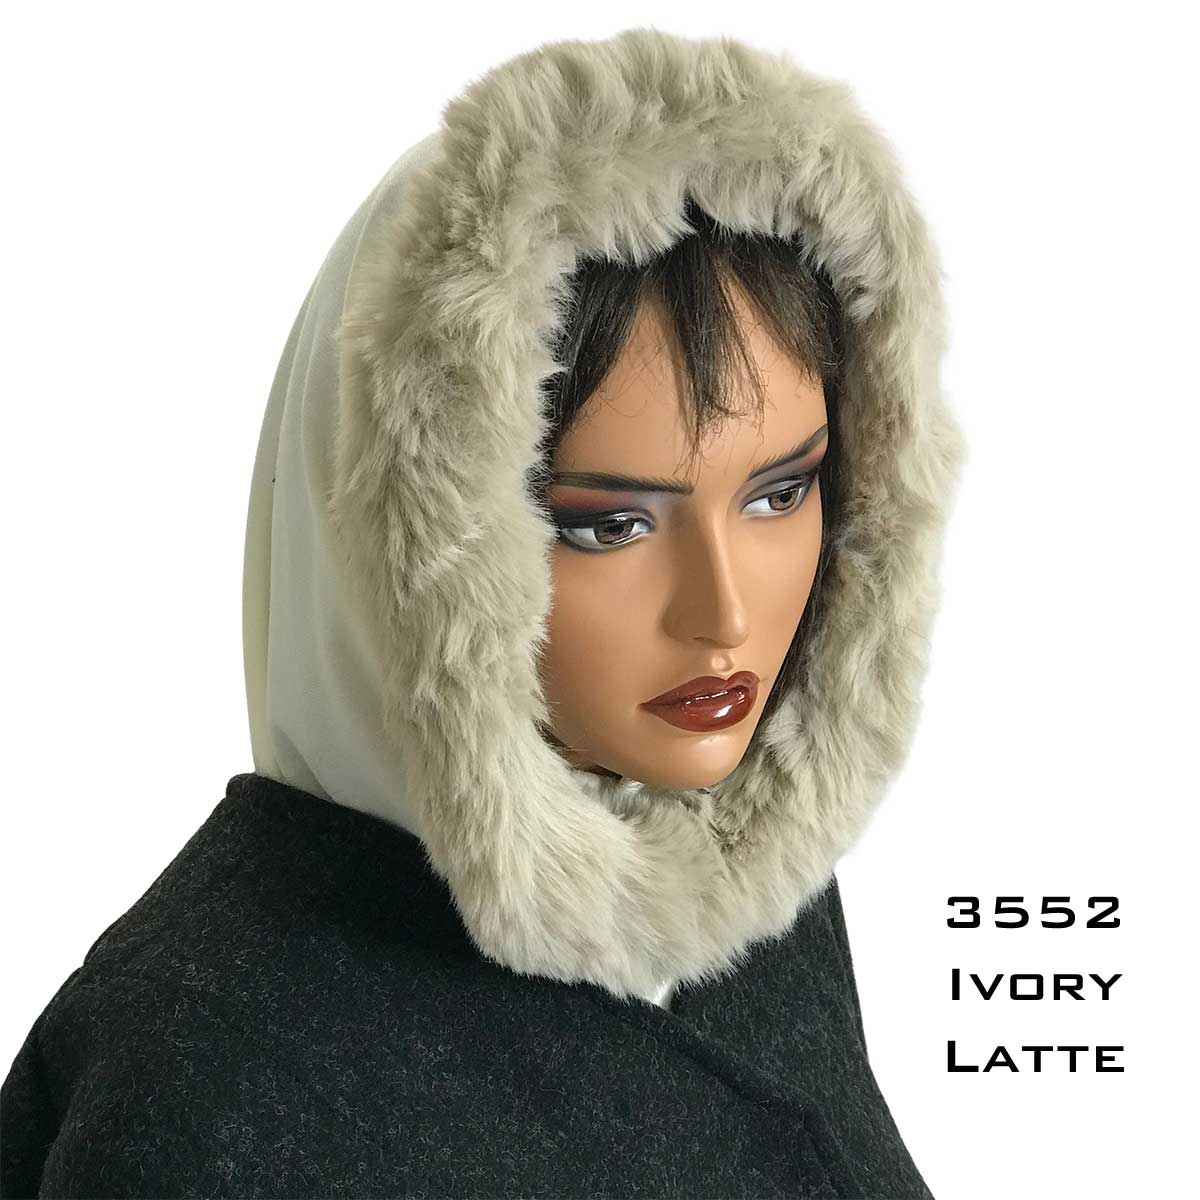 3552 - Fur Trimmed Infinity Hood  Leaopard White/Black<br> Black Fur Trimmed Infinity Hood - 